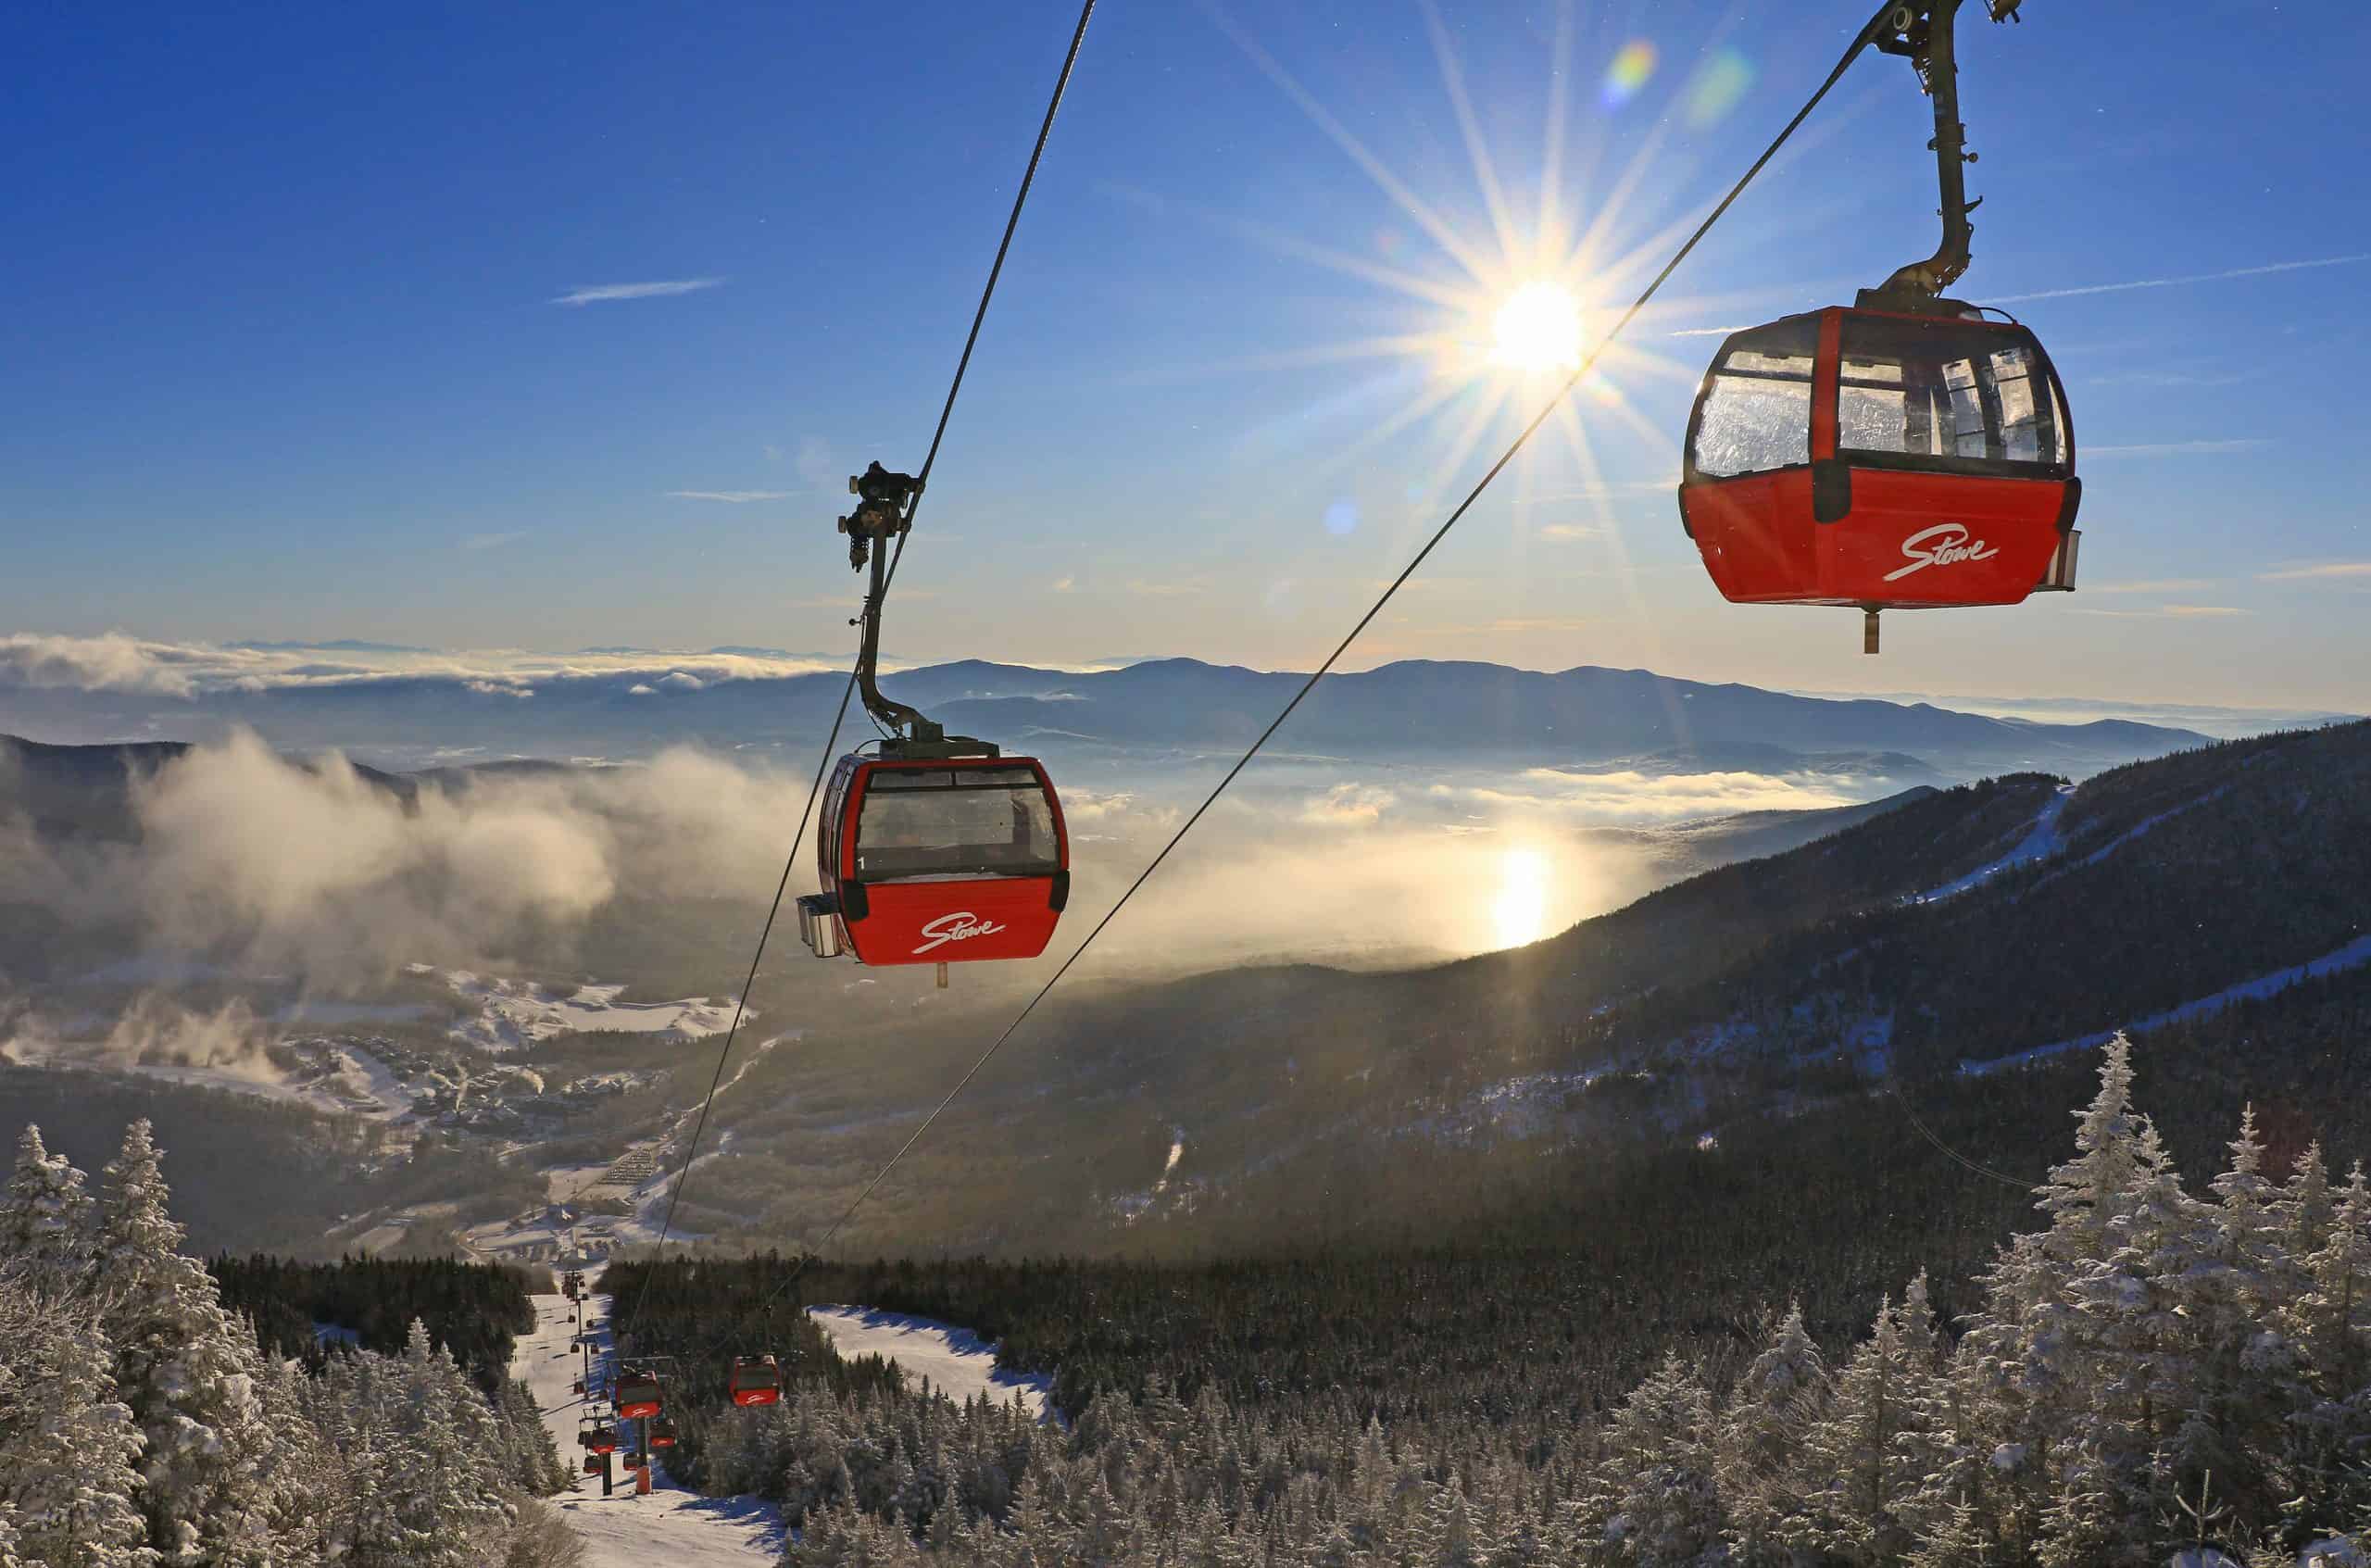 Stowe Mountain Resort - Winter Gondola with Sunshine